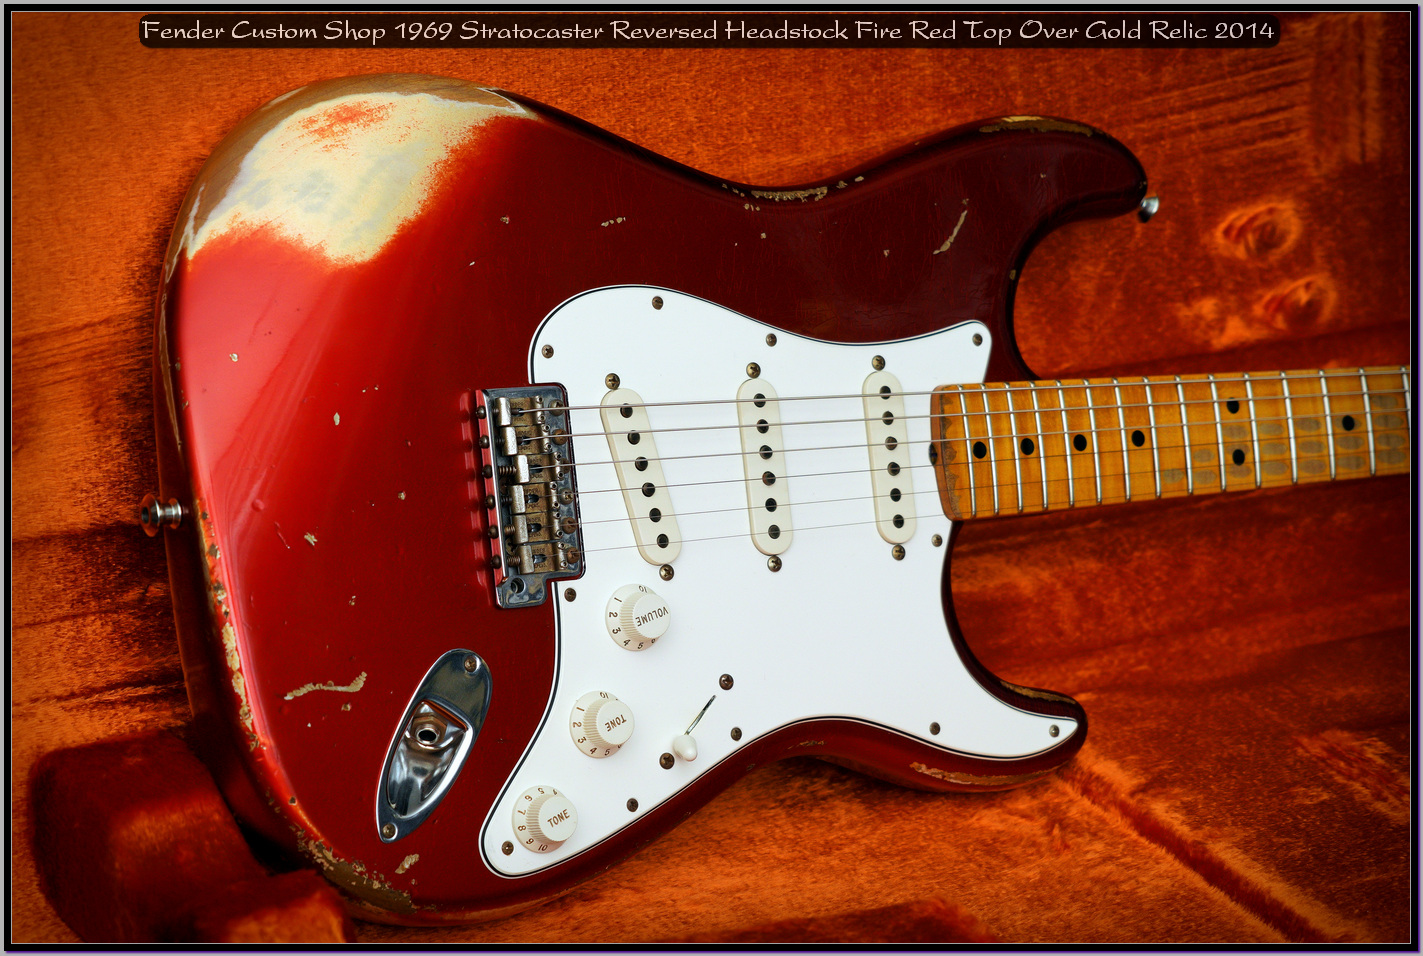 Fender Custom Shop 1969 Stratocaster Reversed Headstock Fire Red Top Over Gold Relic 2014 17_x1440.jpg